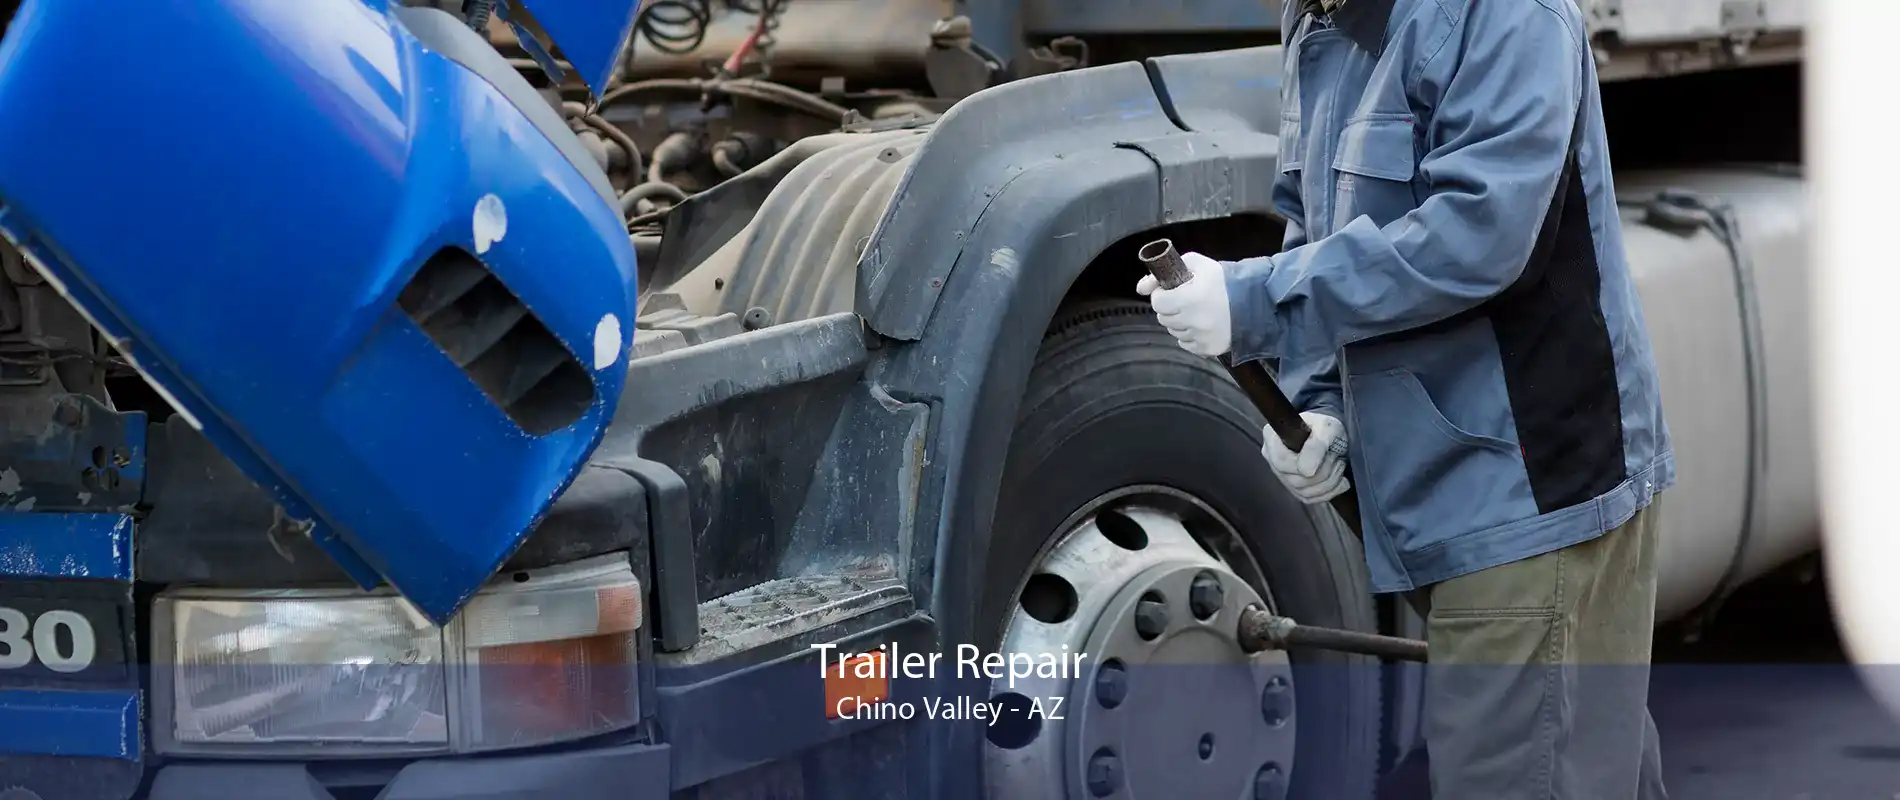 Trailer Repair Chino Valley - AZ